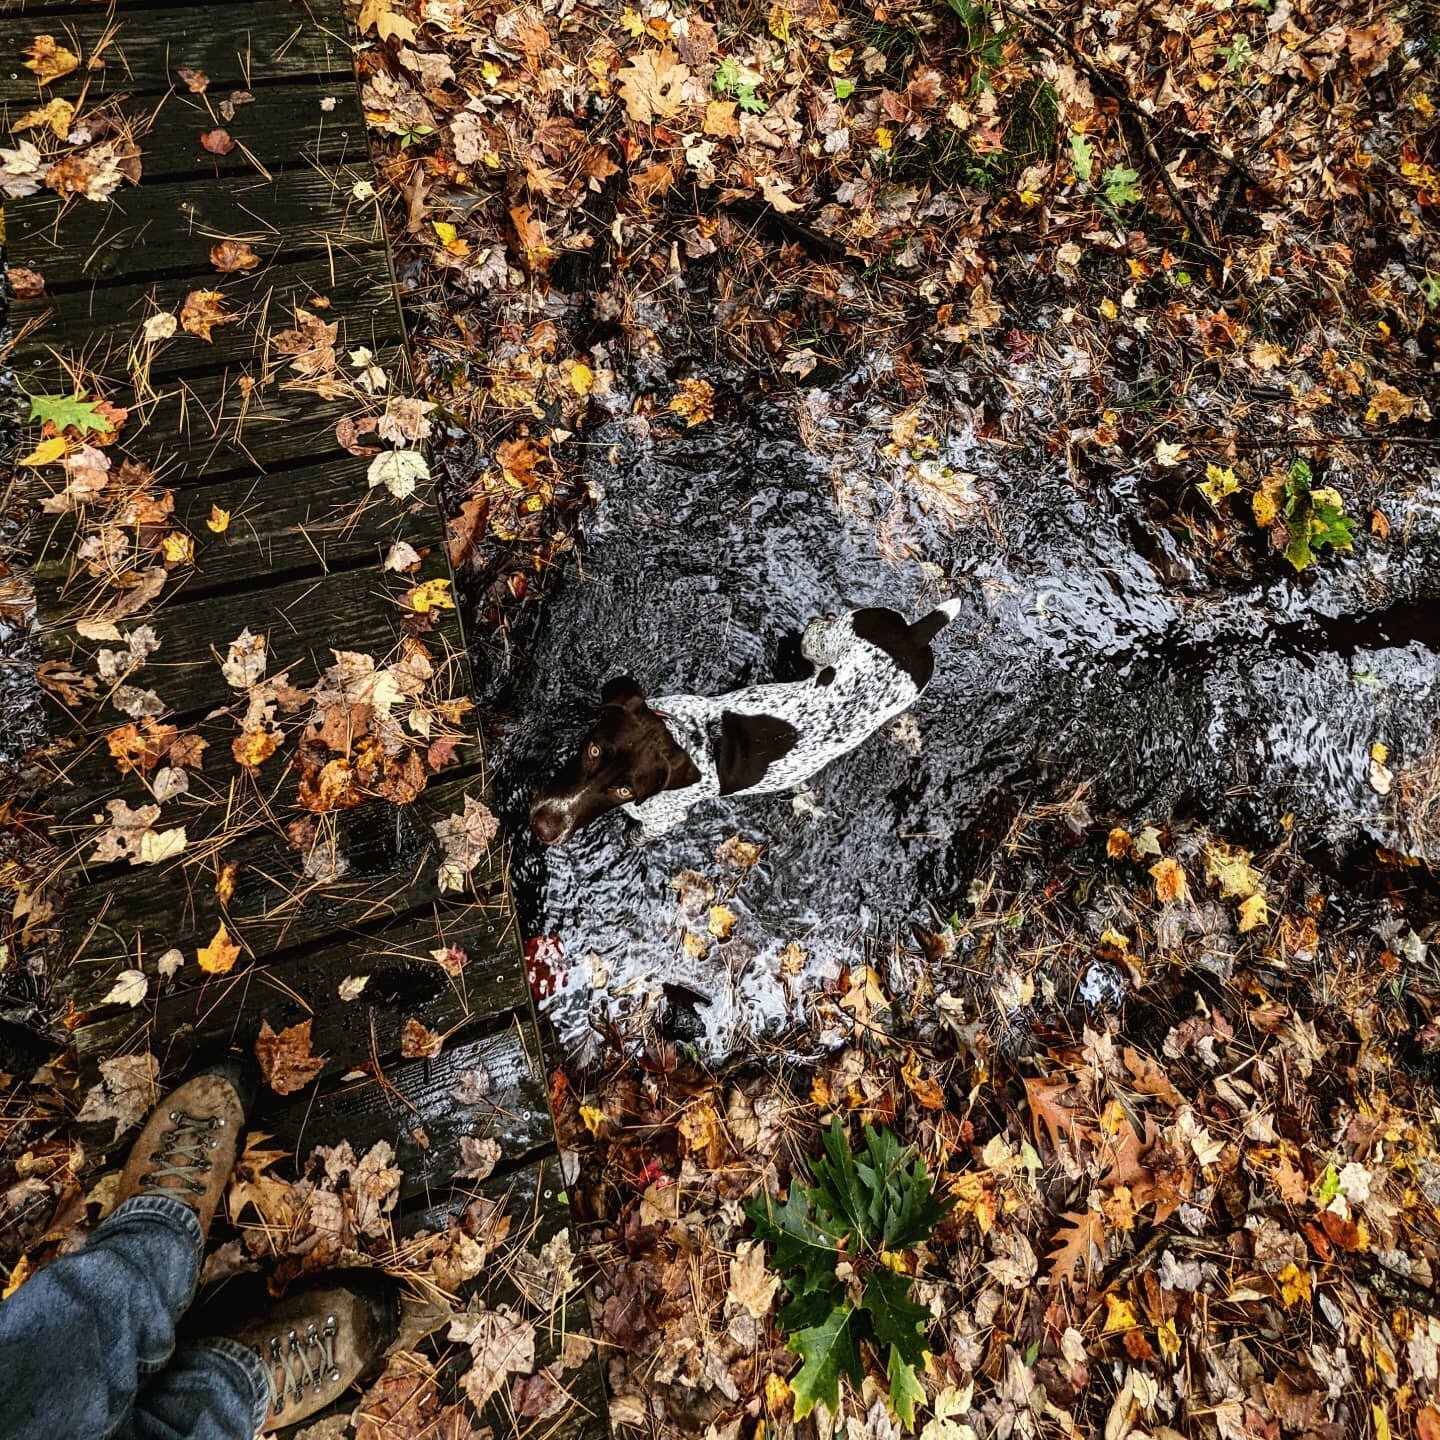 Obligatory annual feet-in-leaves fall photo. #puppybonus #getoutside